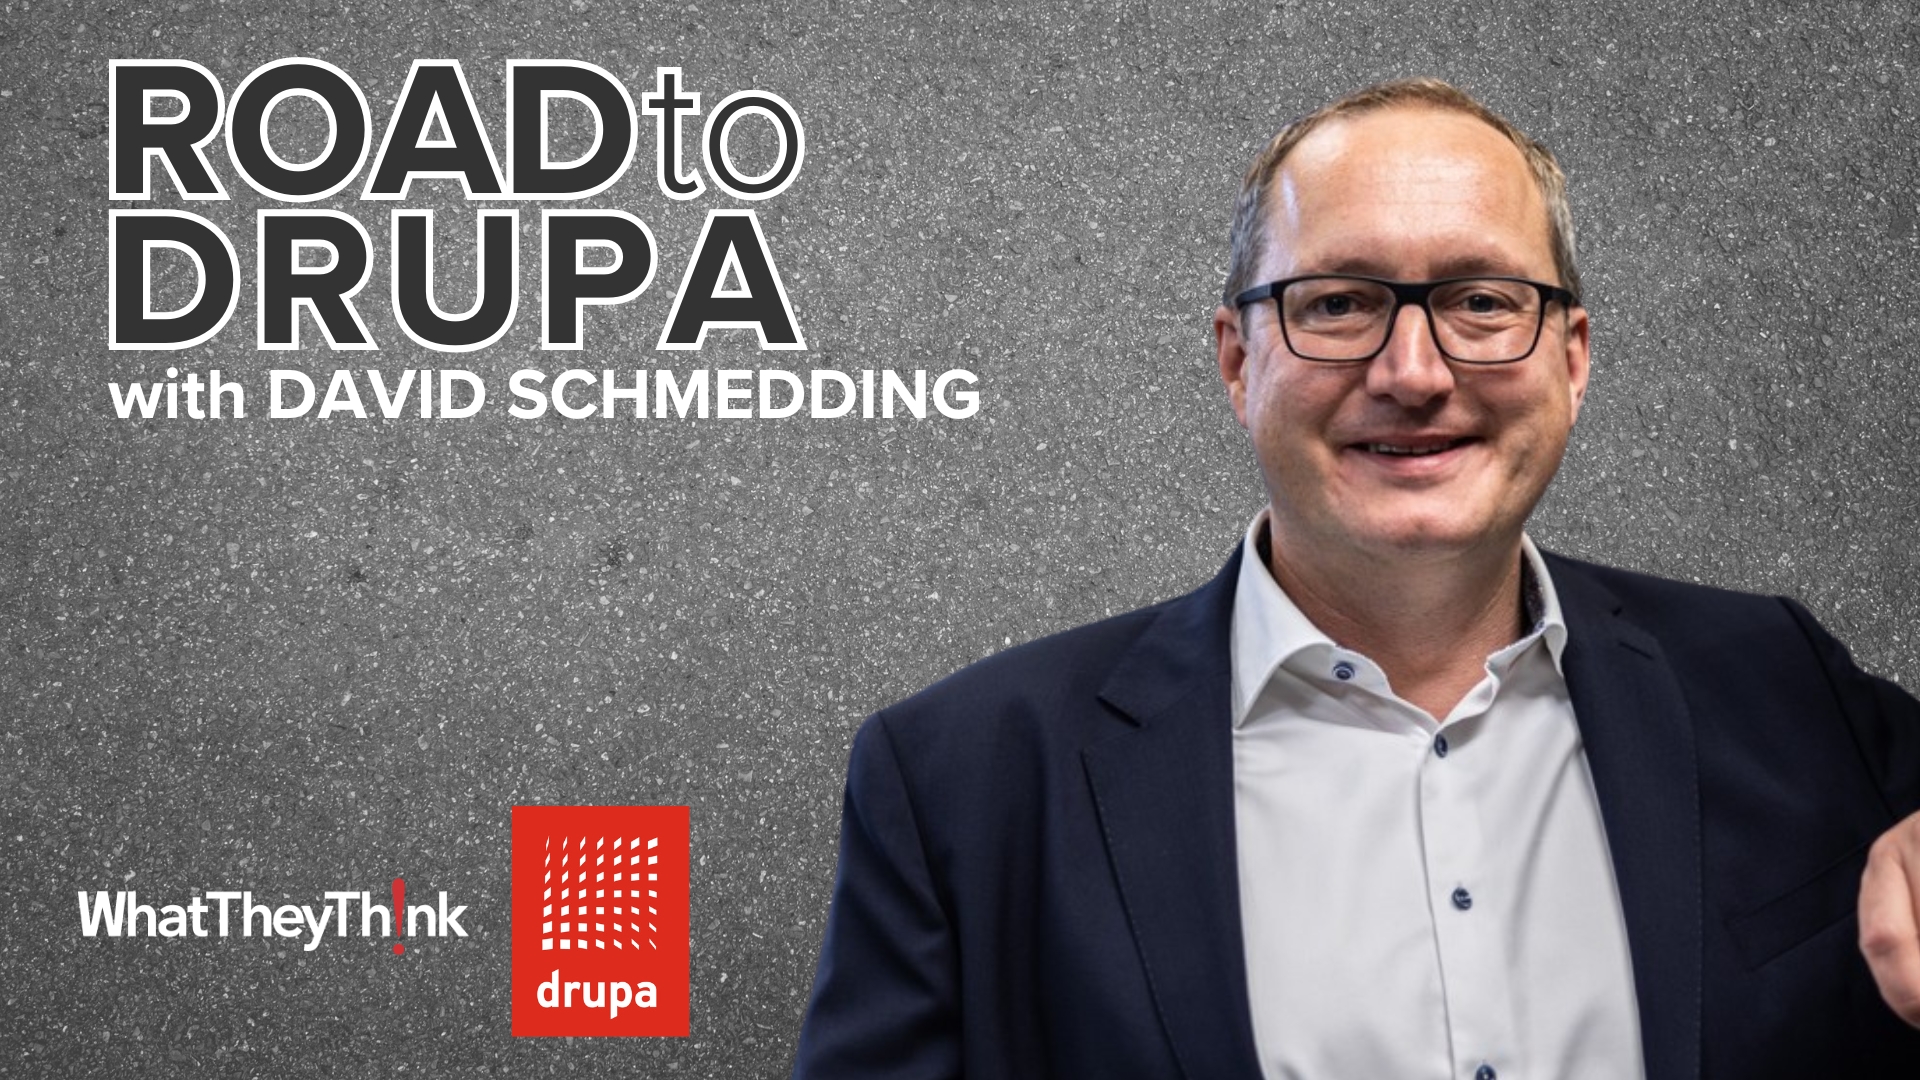 Road to drupa: Heidelberg's David Schmedding